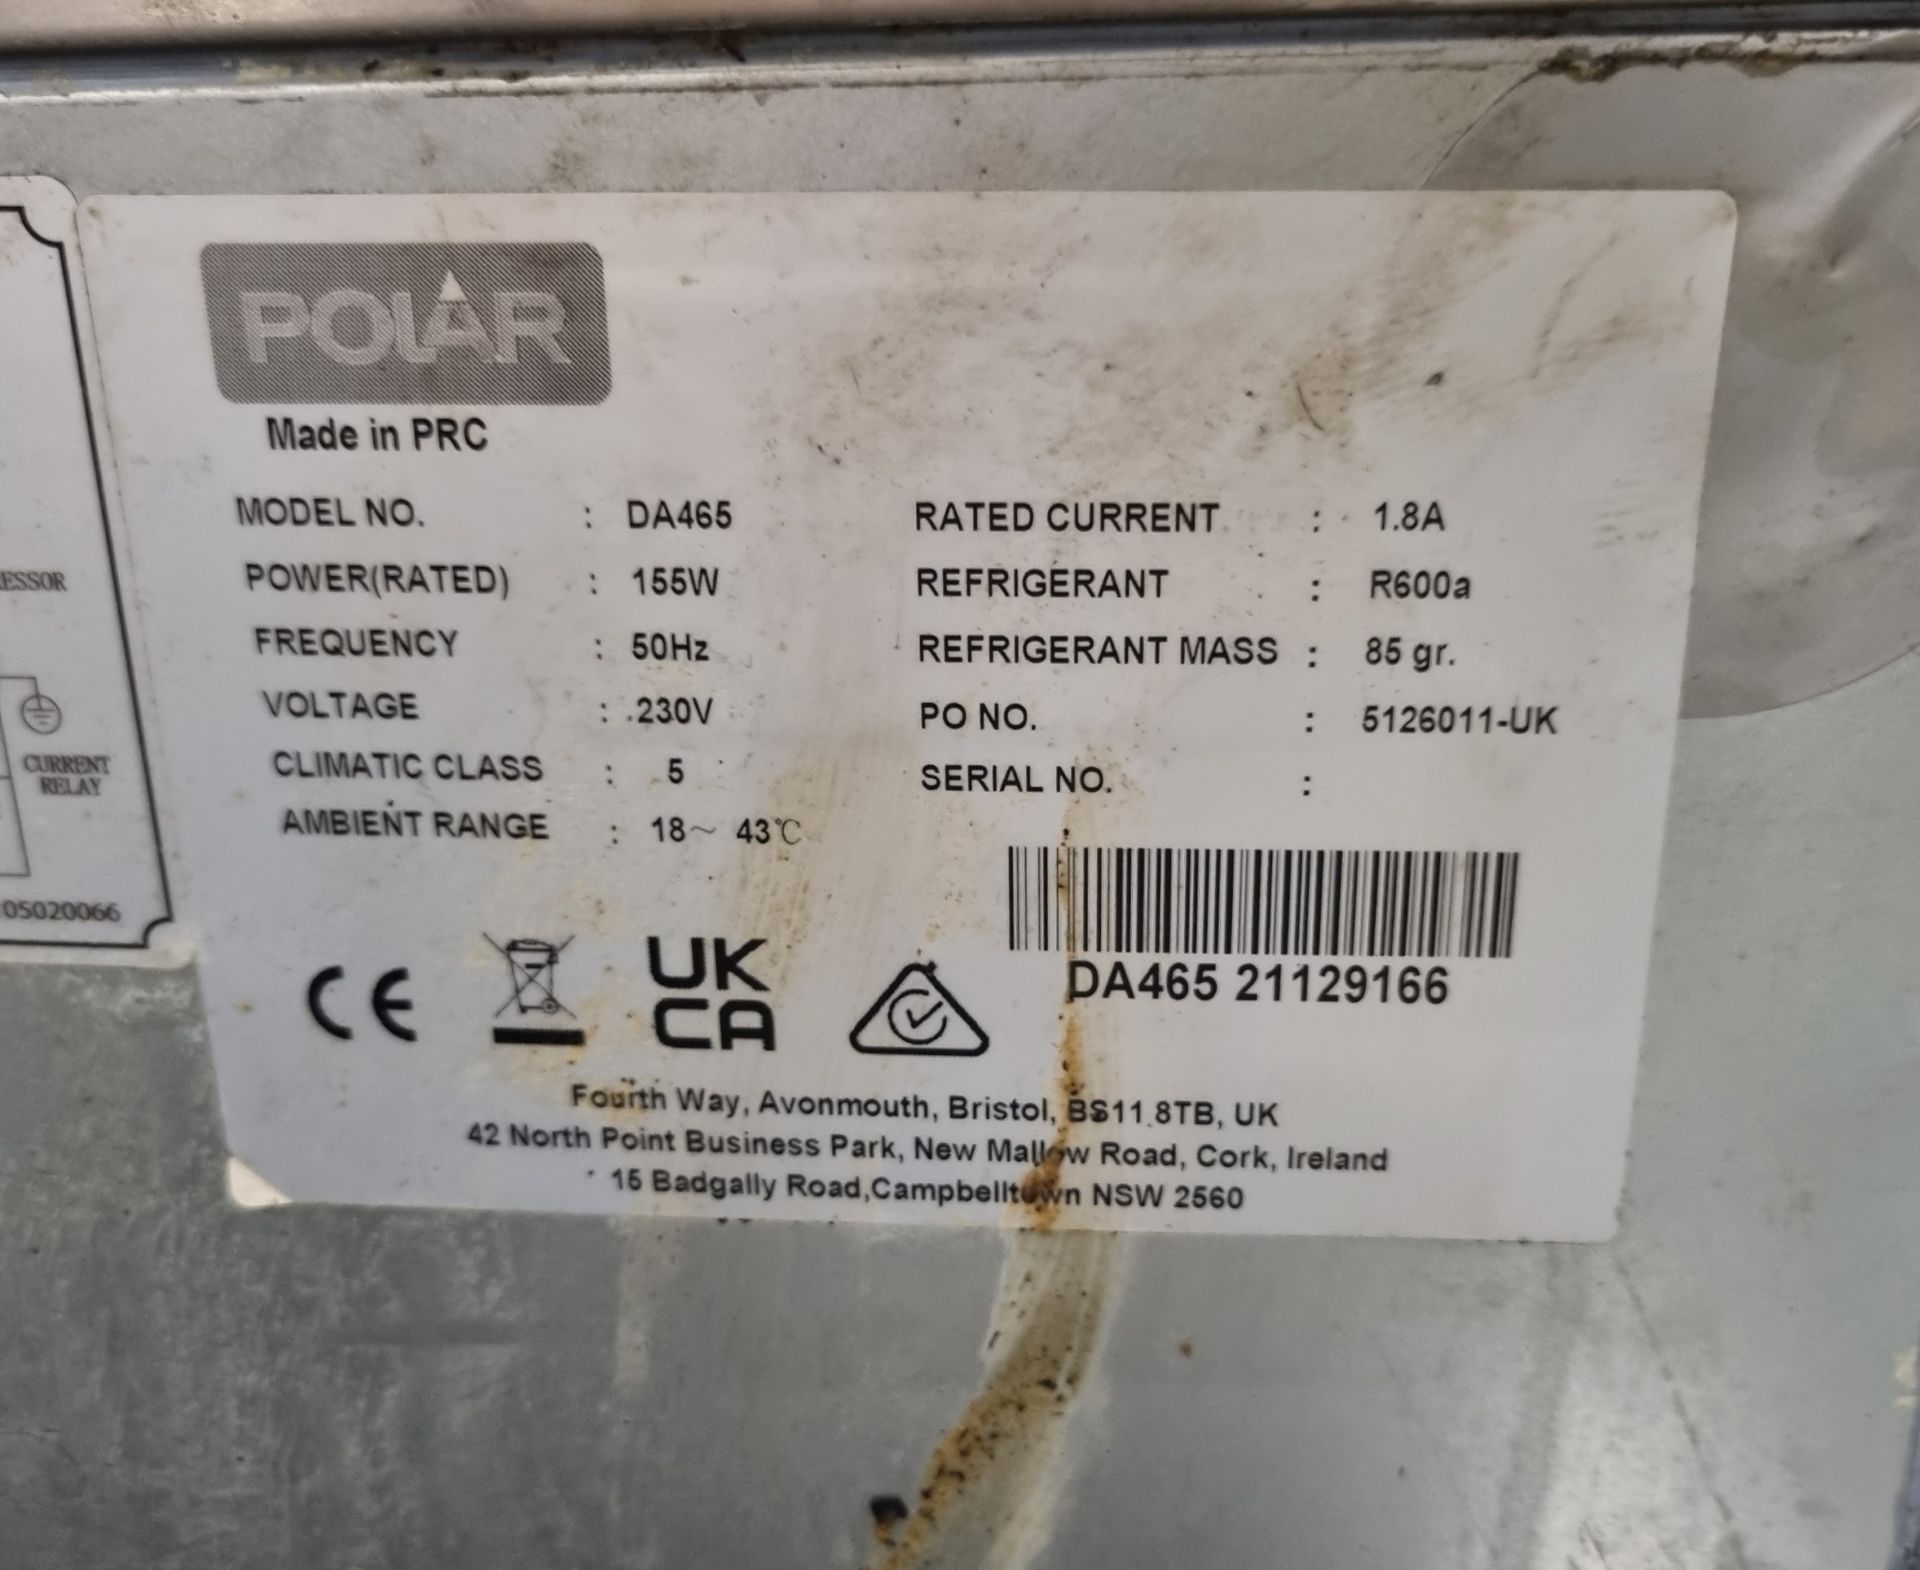 Polar DA 465 stainless steel 6 drawer base counter fridge - W 1800 x D 700 x H 630mm - Image 5 of 5